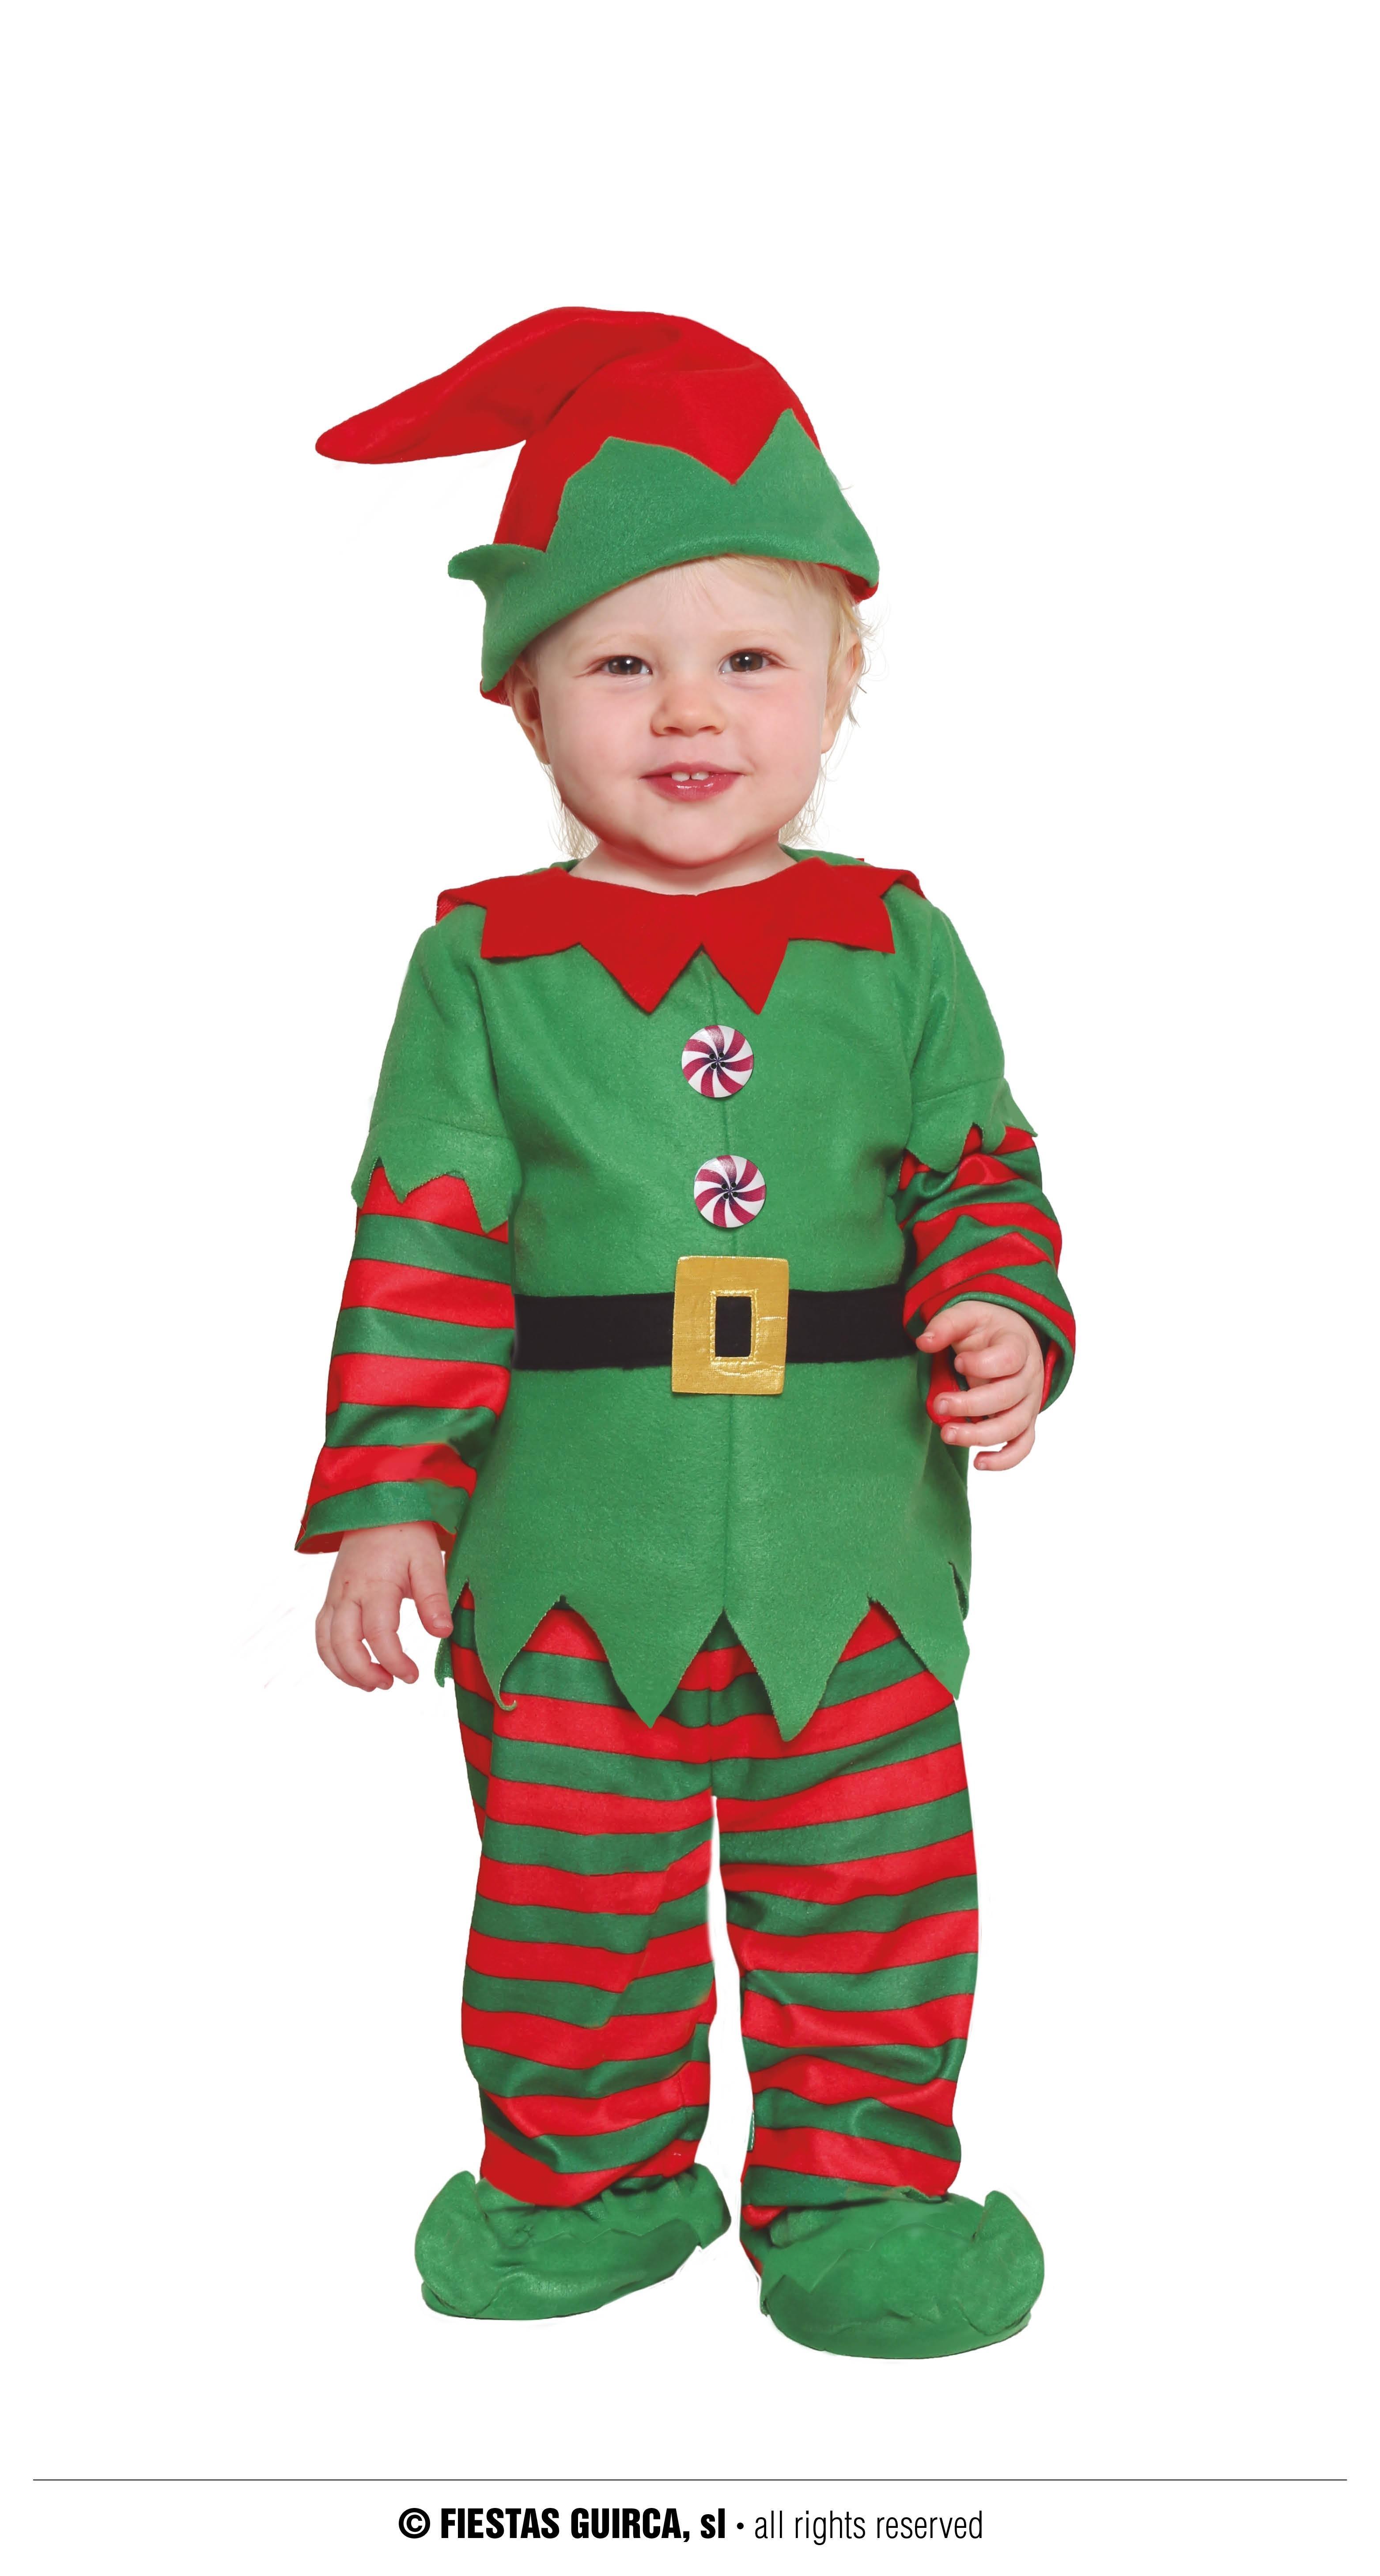 Cubre bota duende o elfo infantil marrón para disfraz Navidad en #sevilla